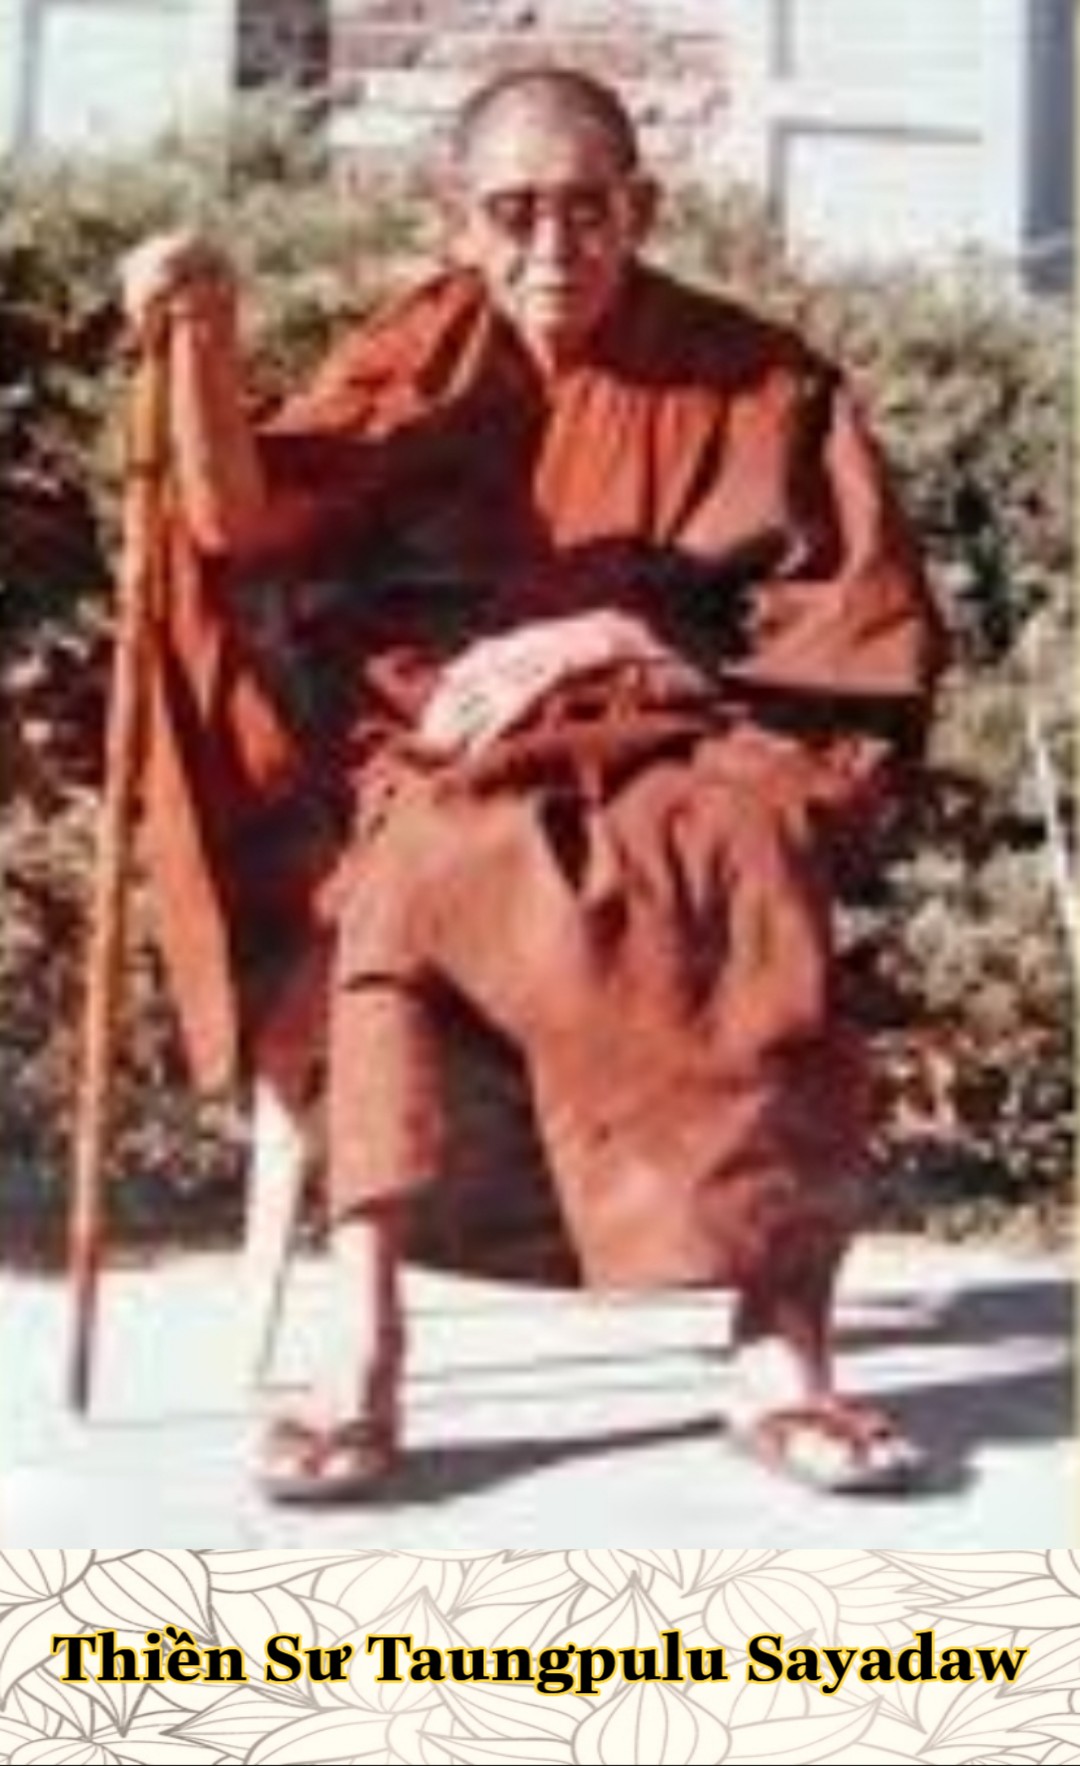 Thiền sư Taungpulu Sayadaw 1